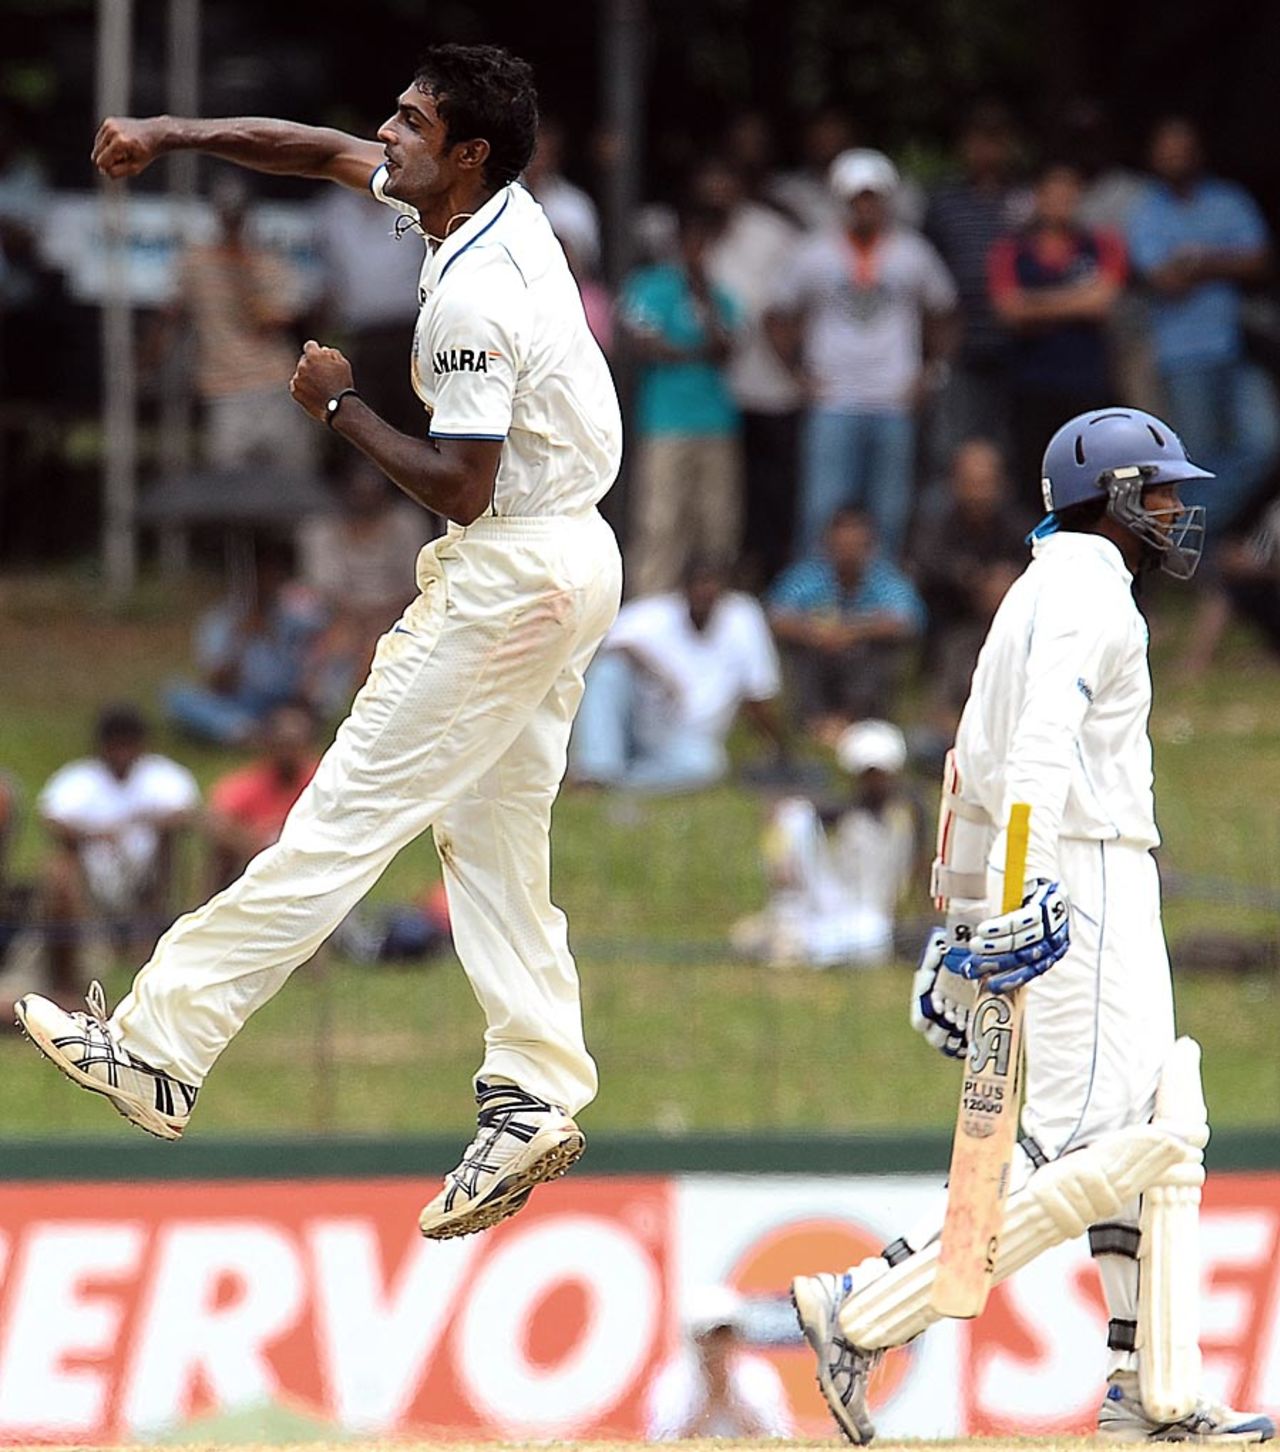 Abhimanyu Mithun gets rid of Tillakaratne Dilshan, Sri Lanka v India, 2nd Test, SSC, 5th day, July 30, 2010